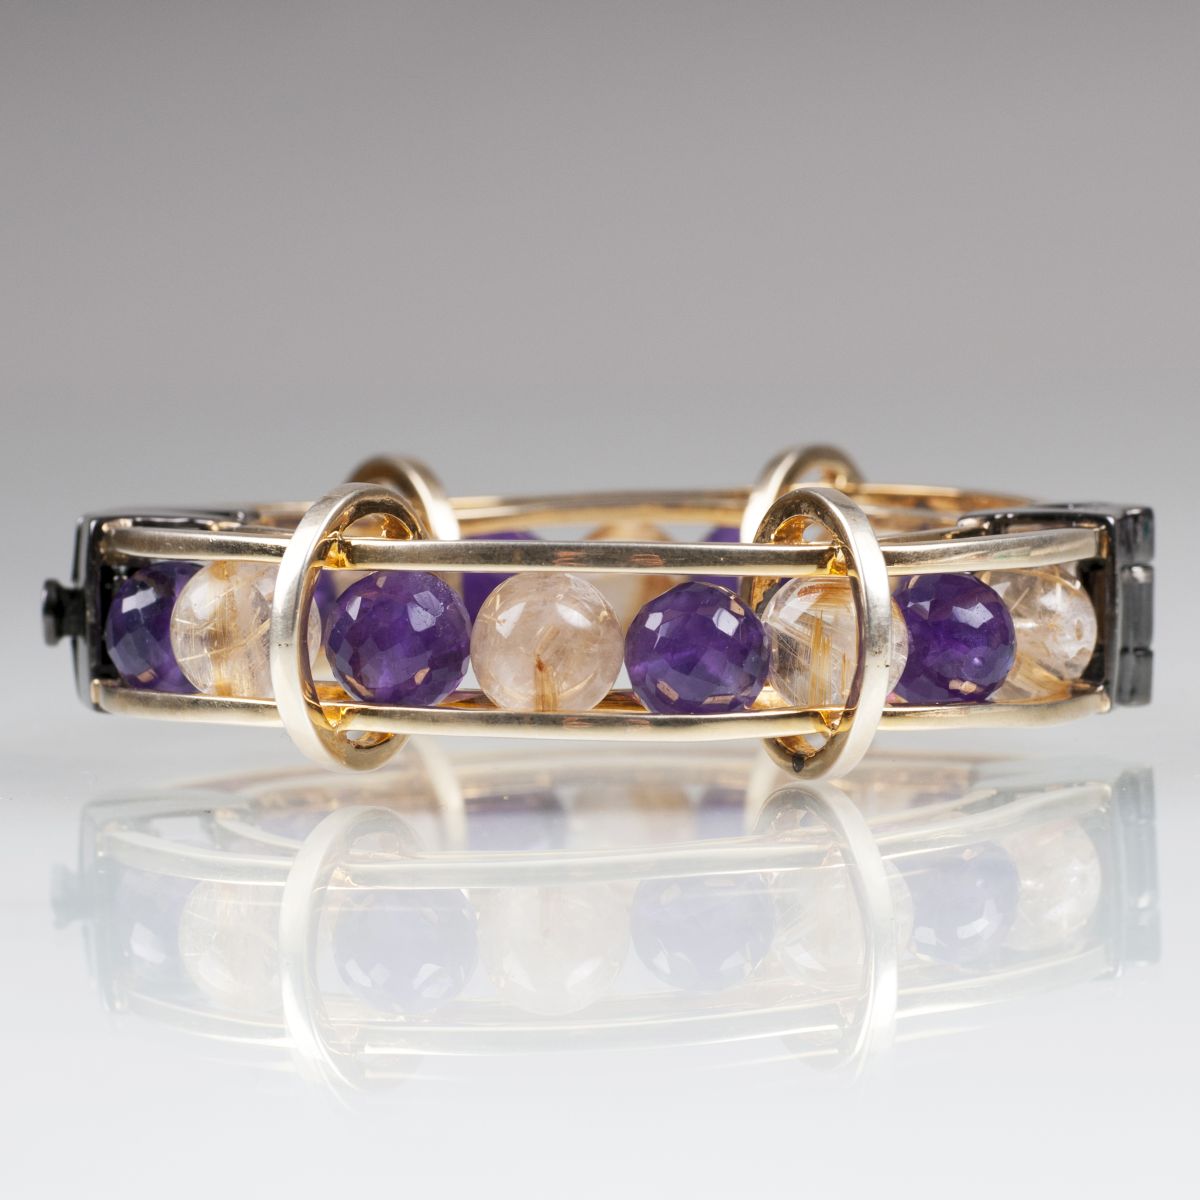 An extraordinary bangle bracelet with amethyst and rutil quartz